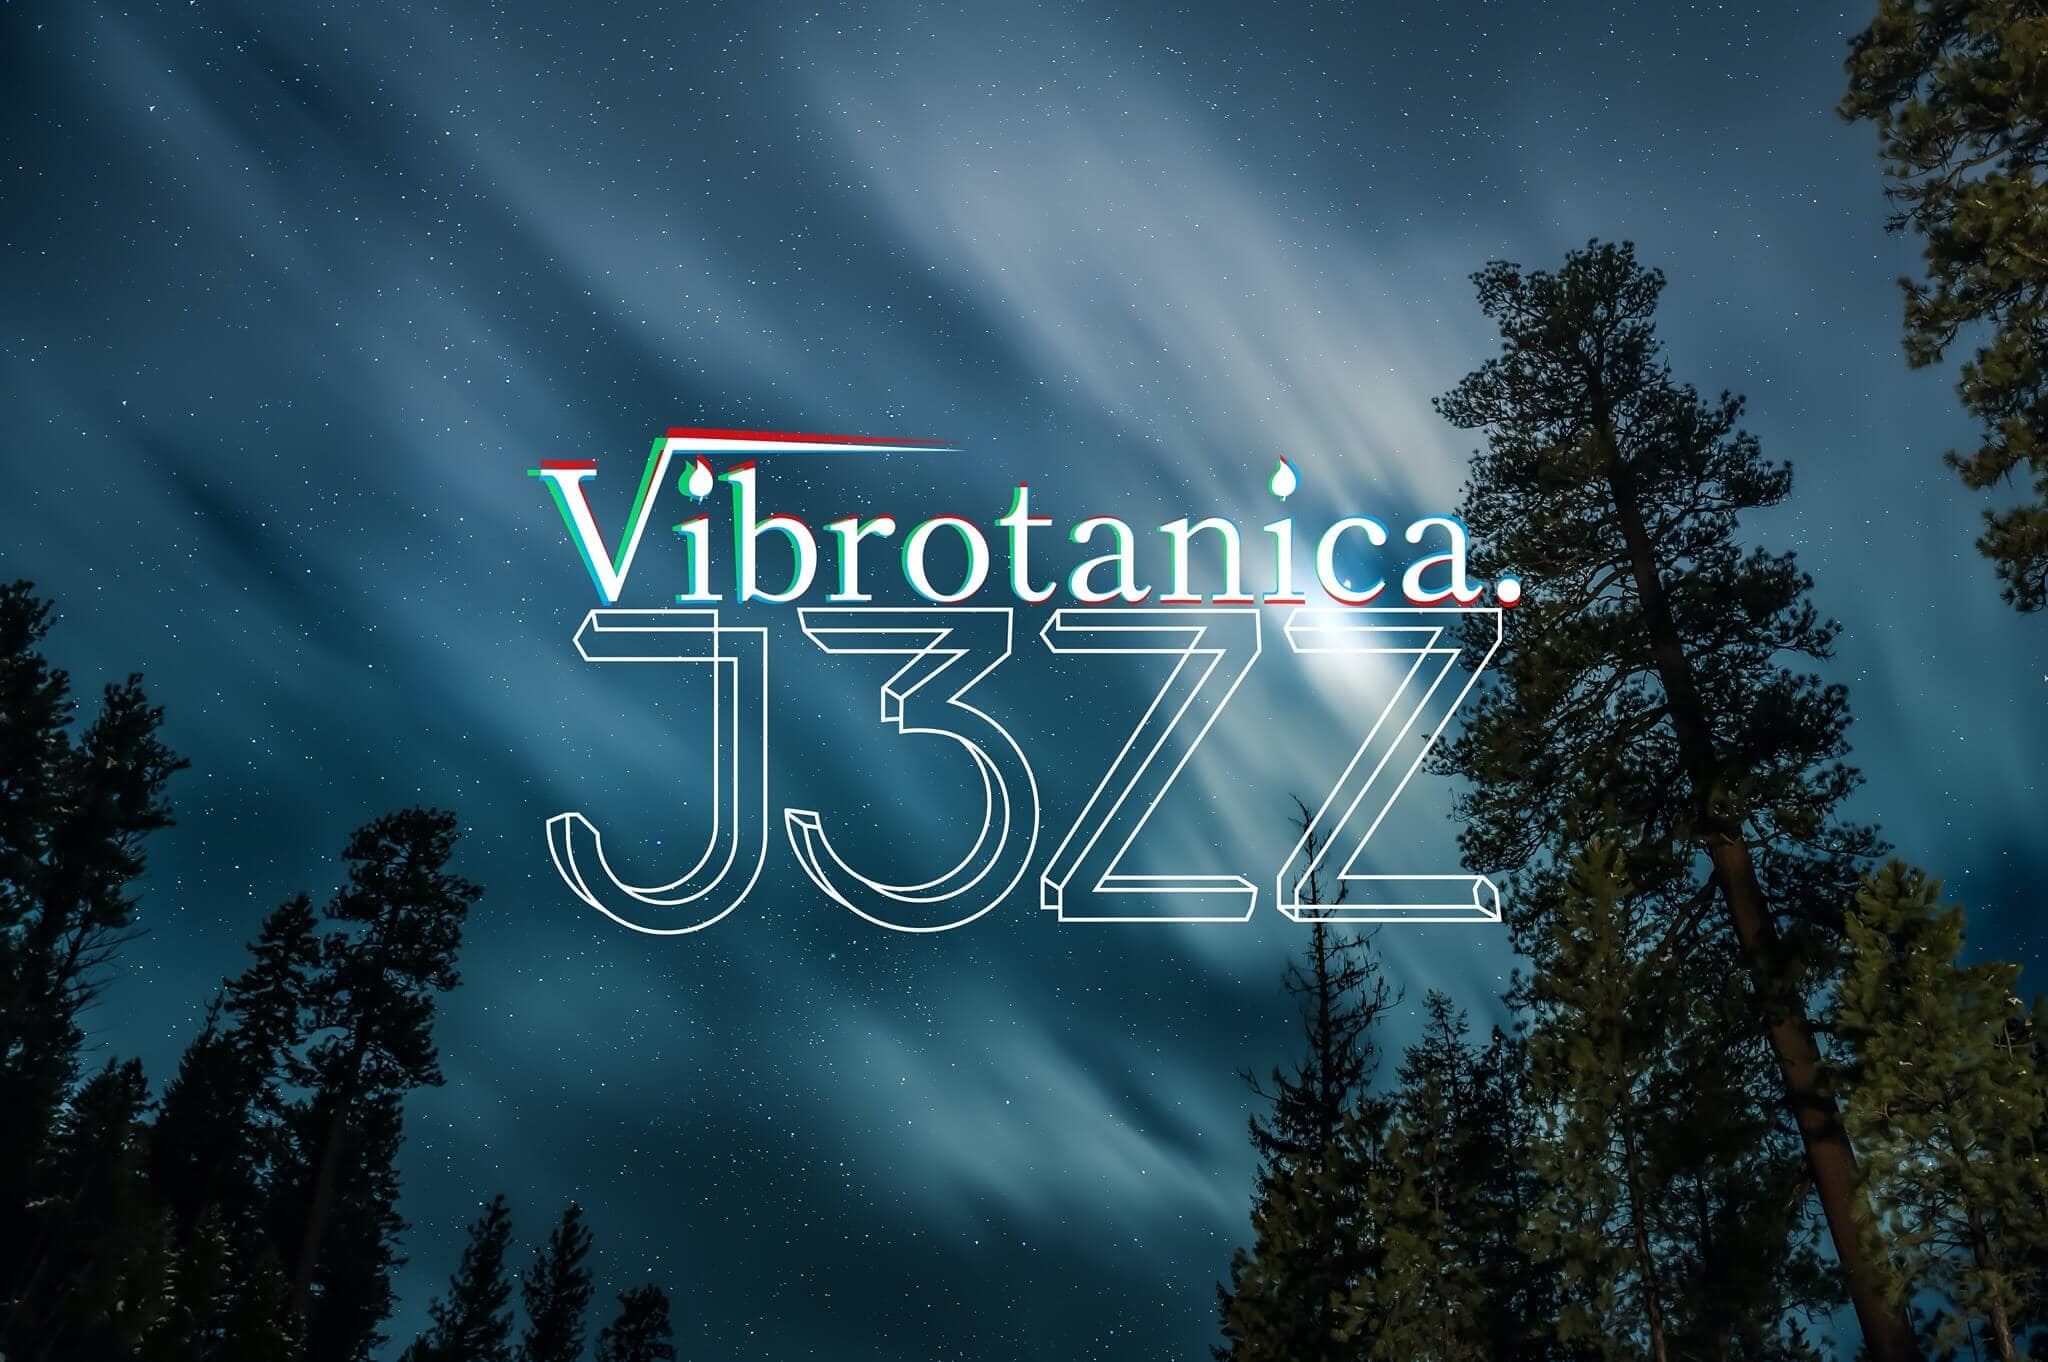 Vibrotanica – under the stars